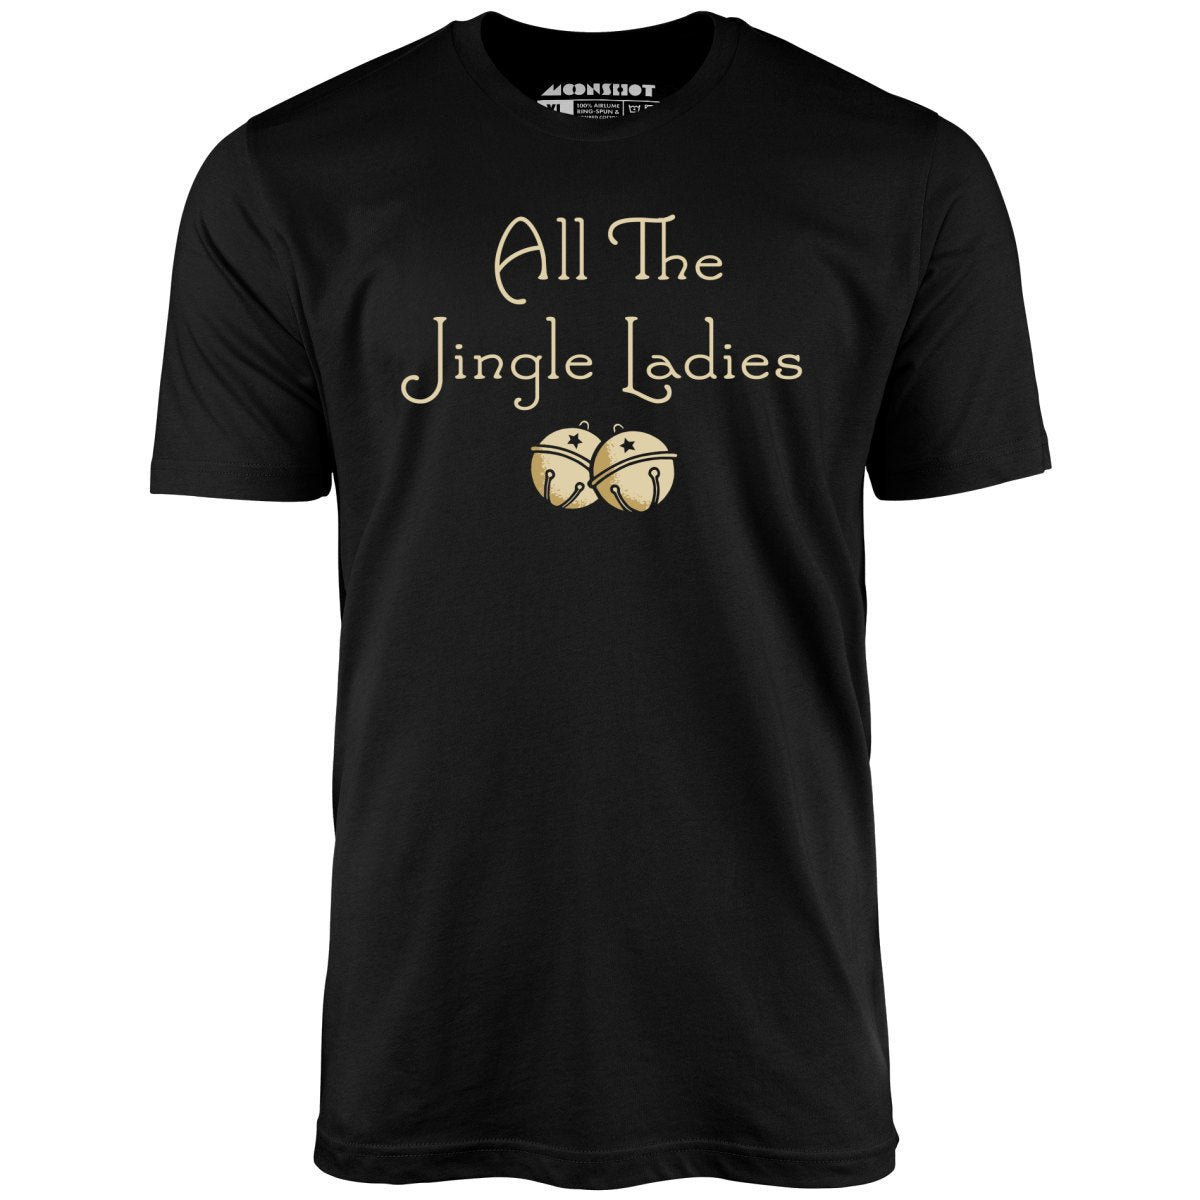 All The Jingle Ladies - Unisex T-Shirt